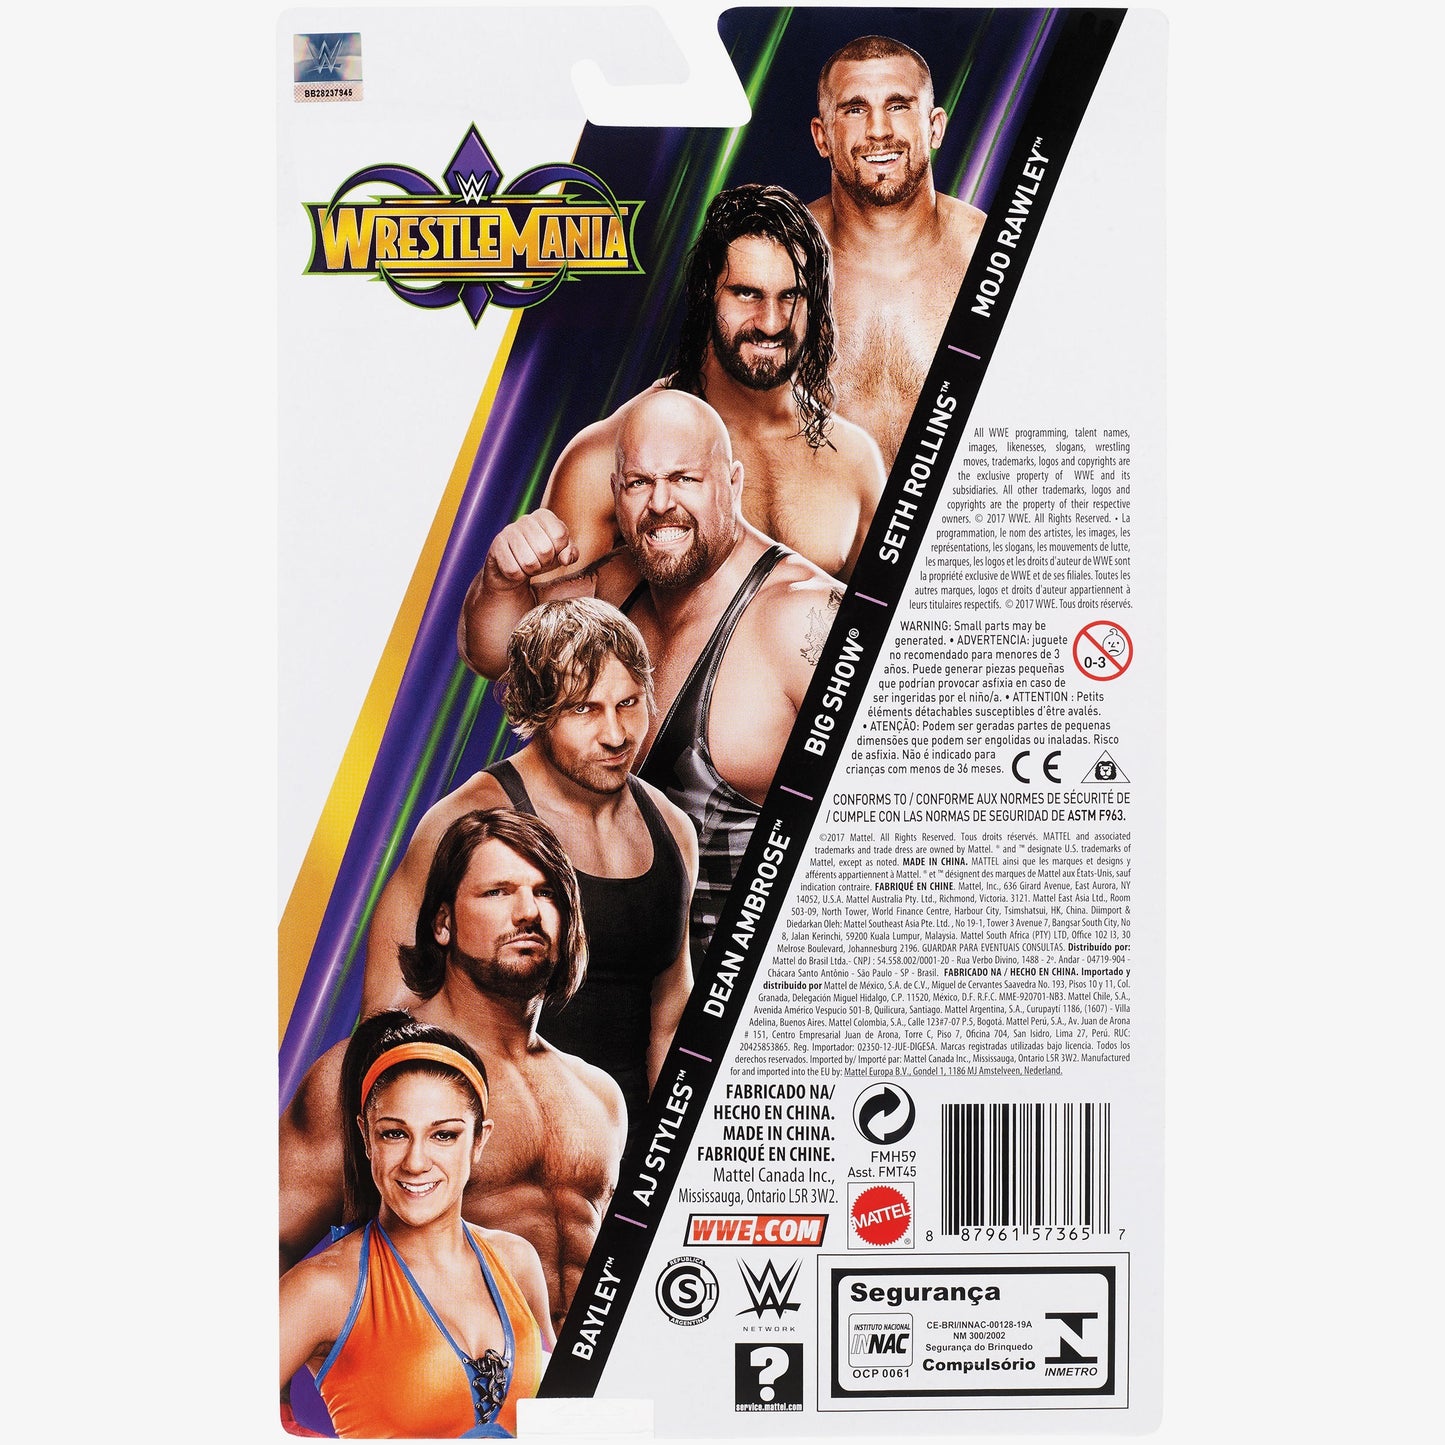 Dean Ambrose - WWE WrestleMania 34 Basic Series